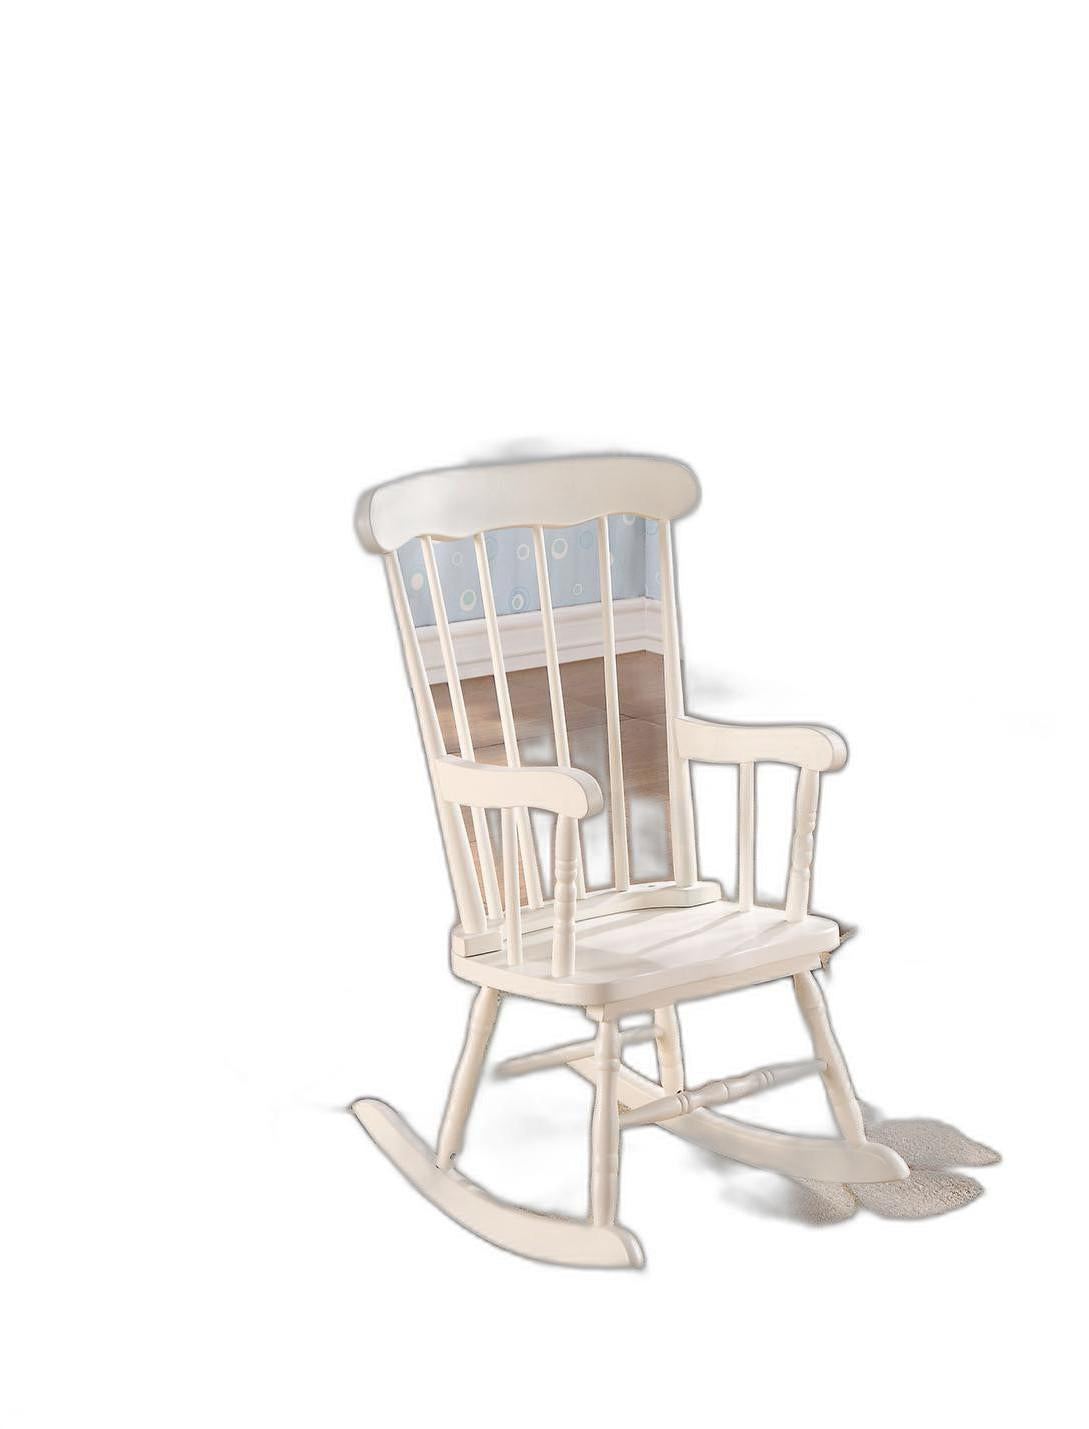 Tall White Wooden Rocking Chair For Children